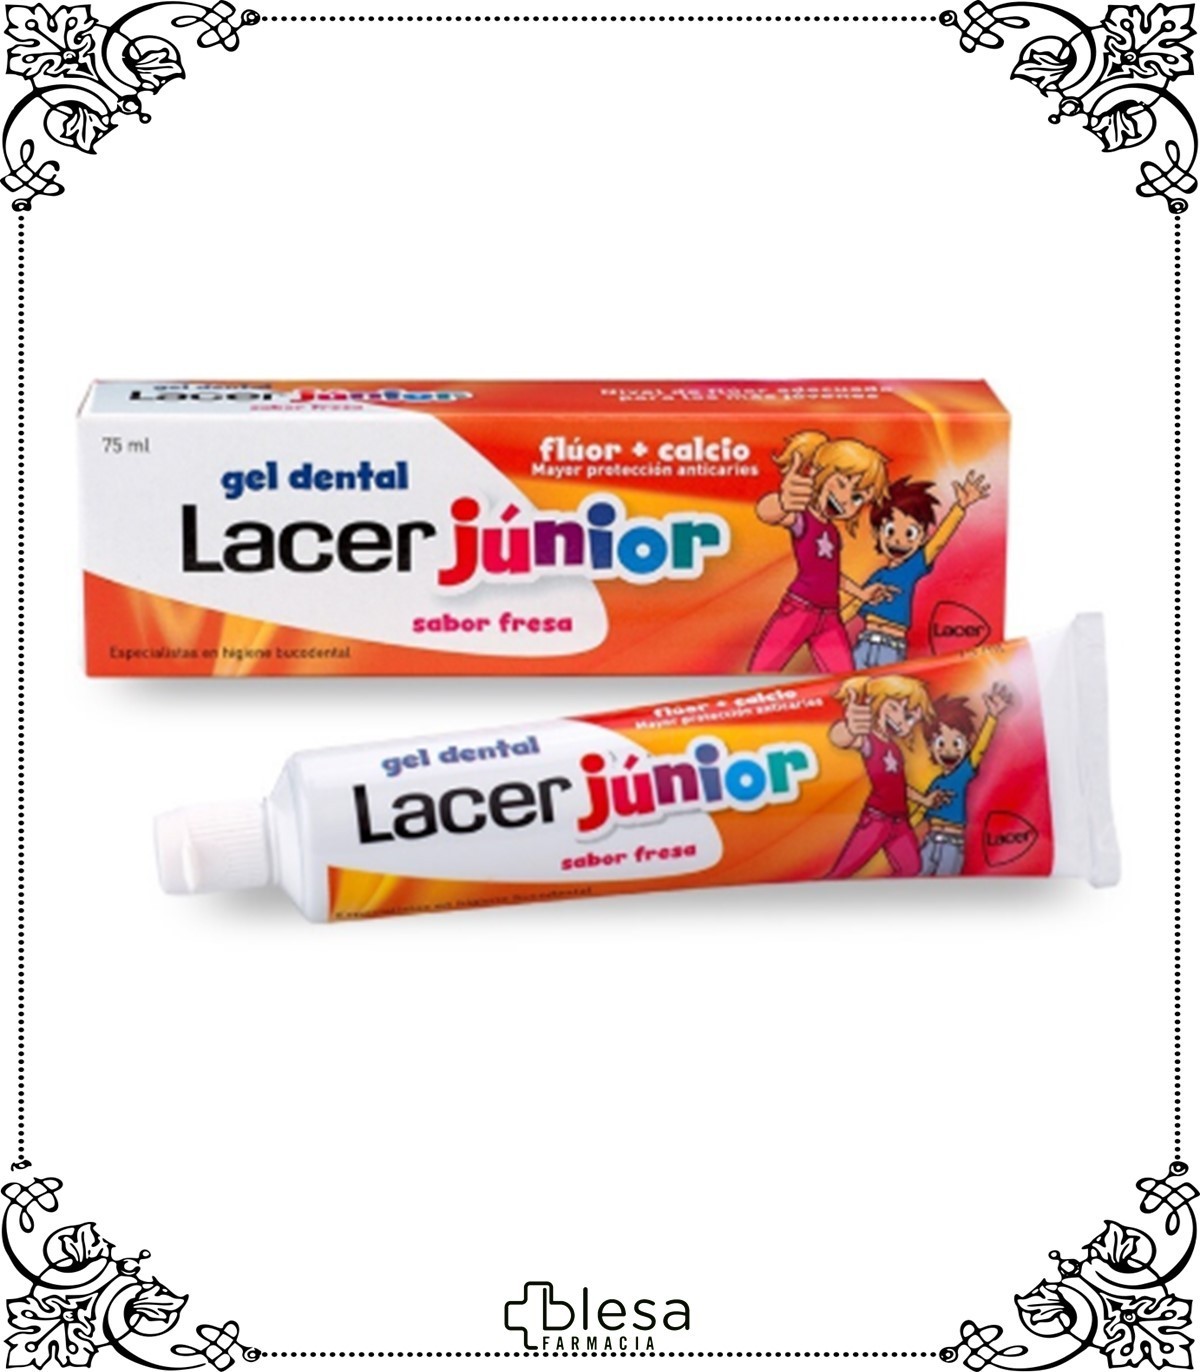 Lacer junior gel dental fresa 75 ml - Blesa Farmacia